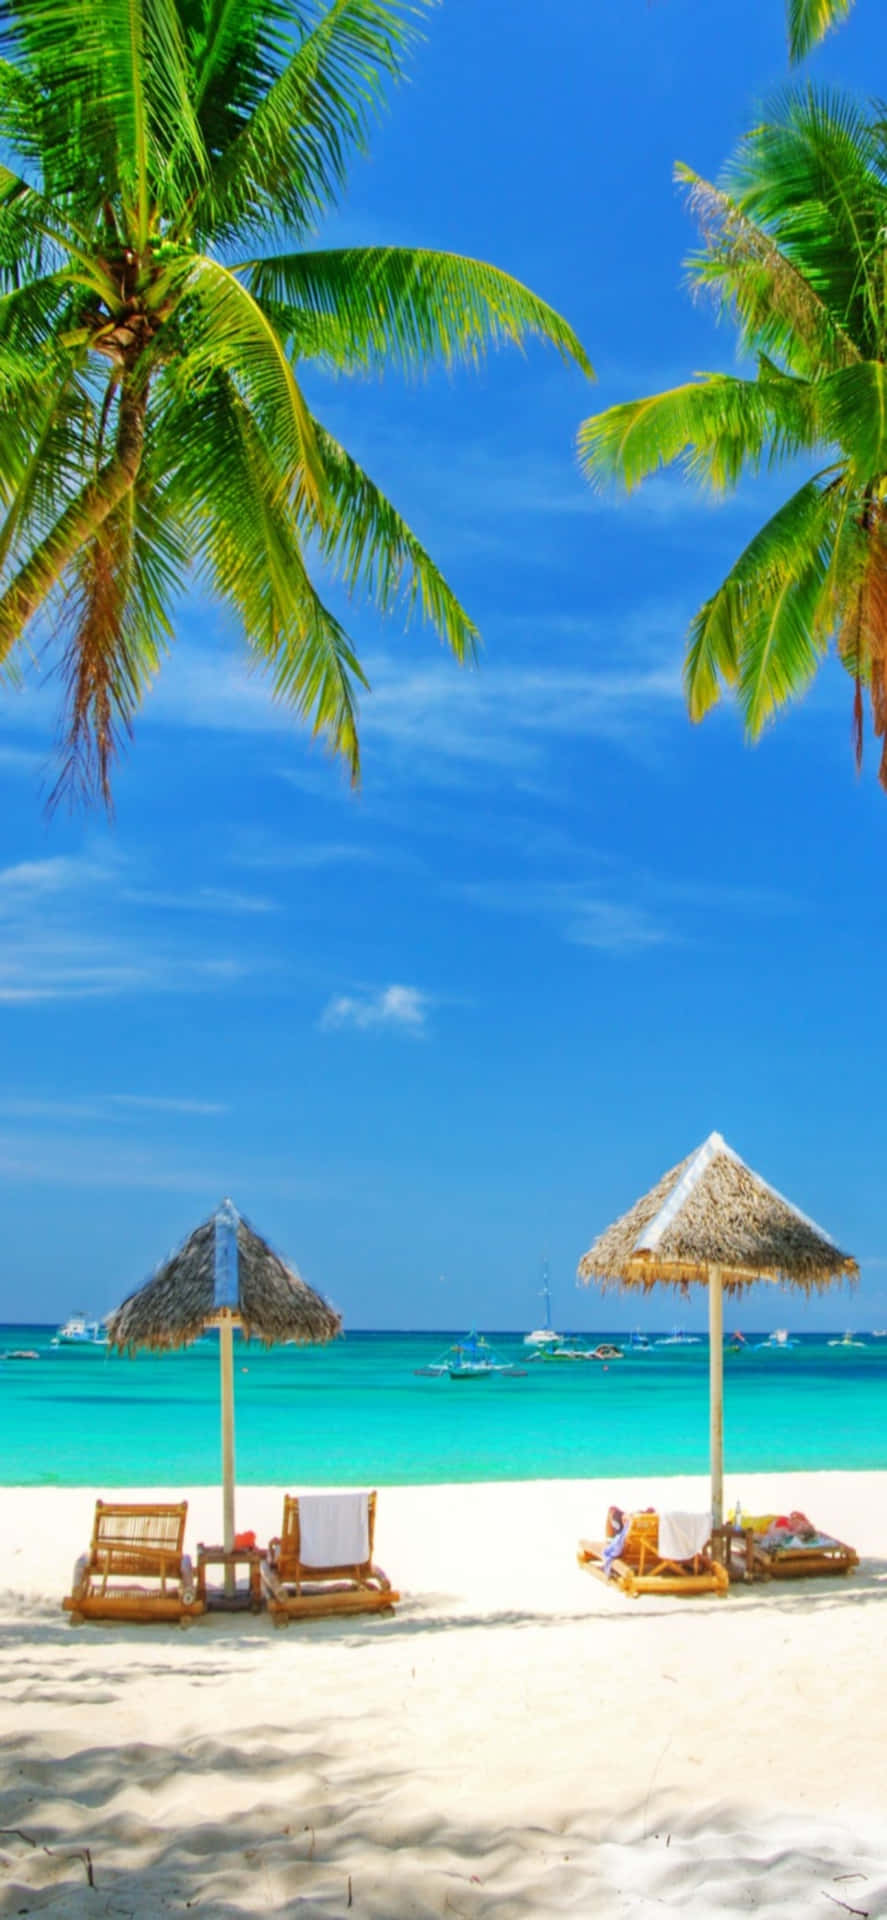 Download Serene Iphone X Wallpaper Featuring A Stunning Beach View ...